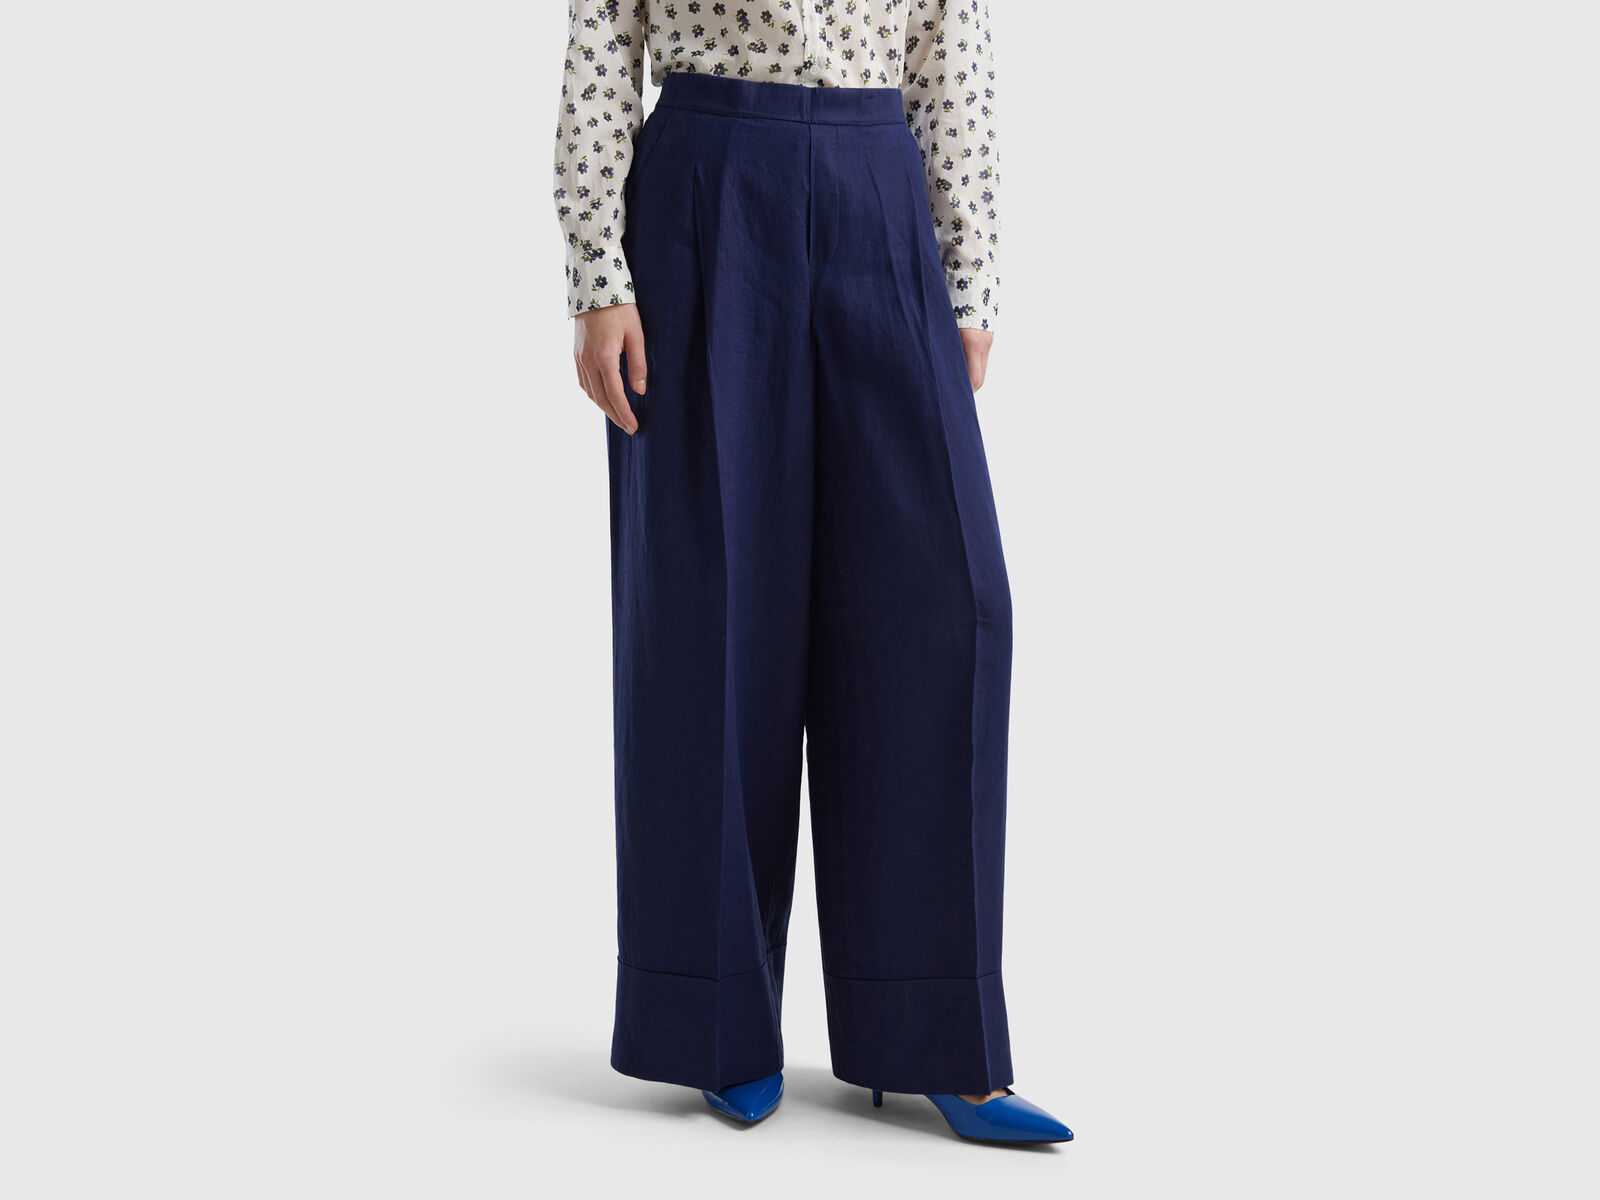 Pantalón recto lino azul - Mujer - PV2019